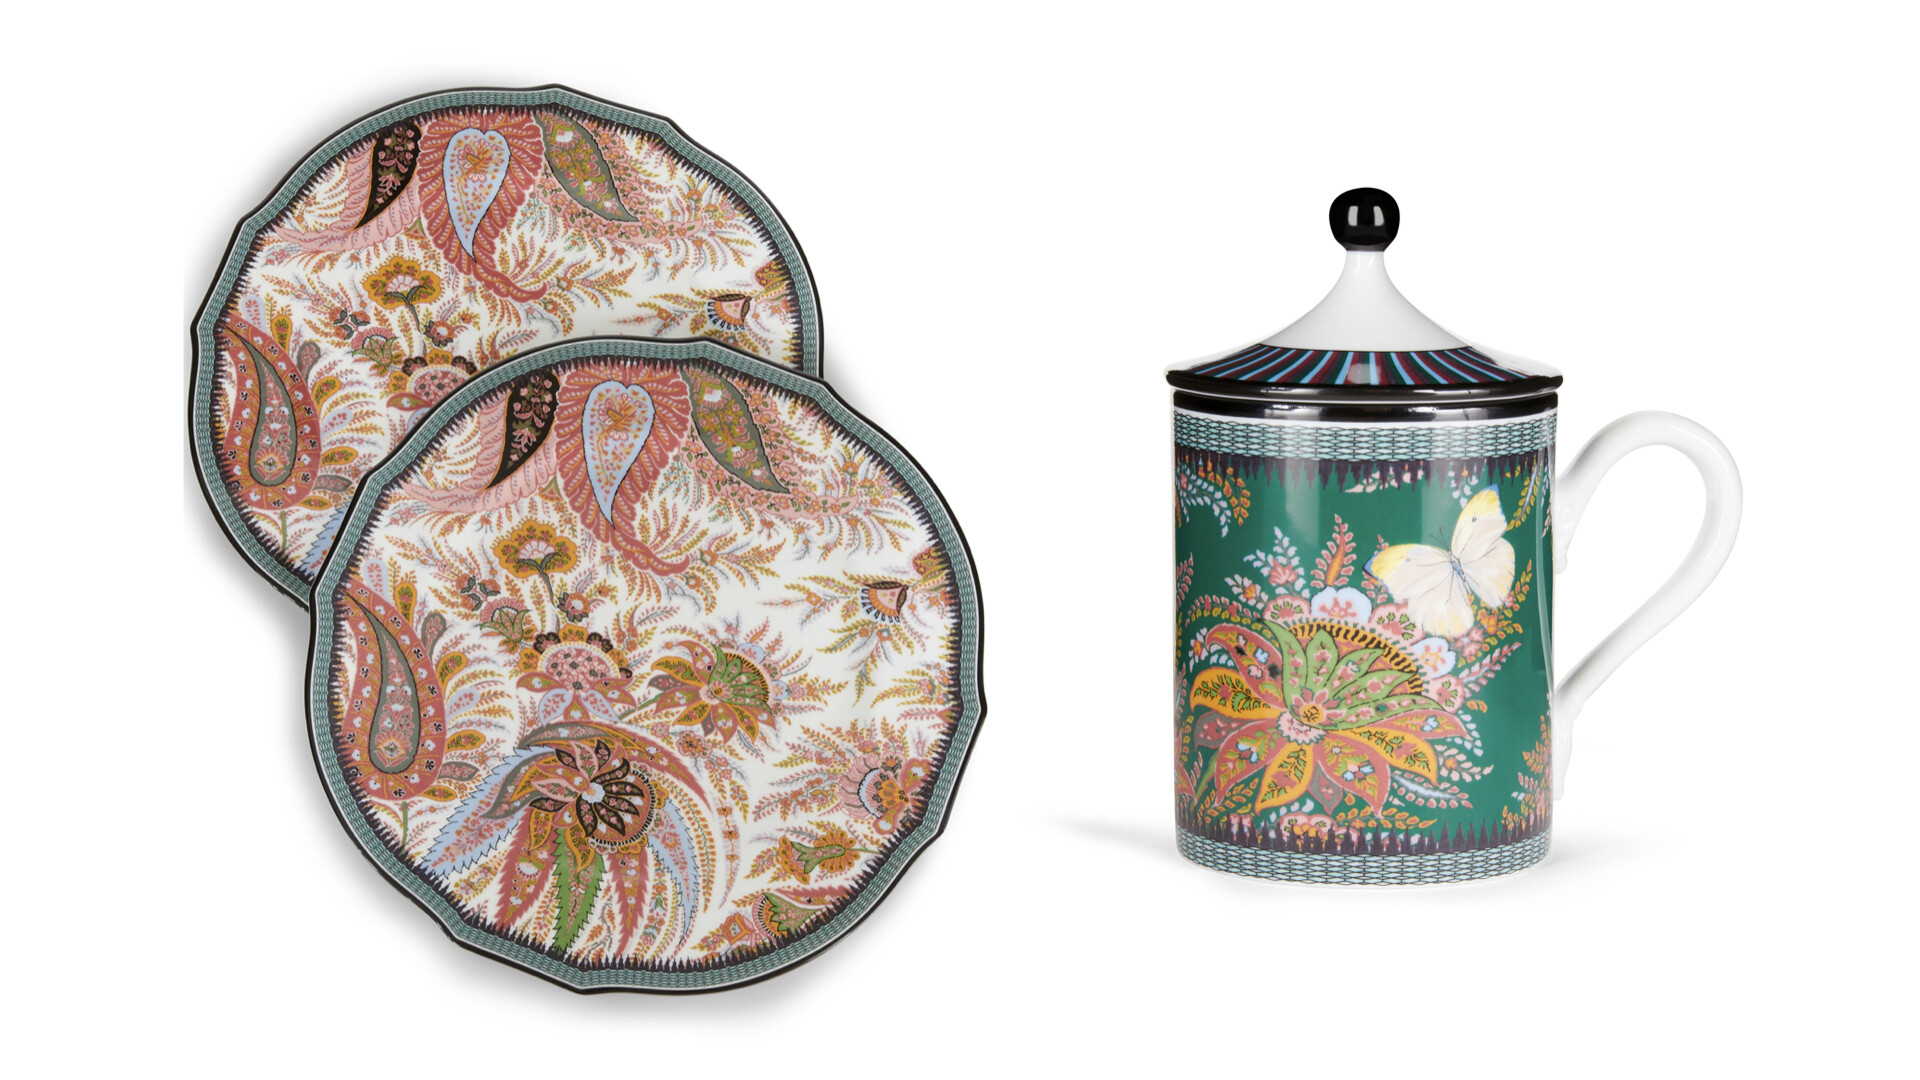 Etro: The Maison’s iconic design, Partnership with Ginori, Porcelain tableware. 1920x1080 Full HD Wallpaper.